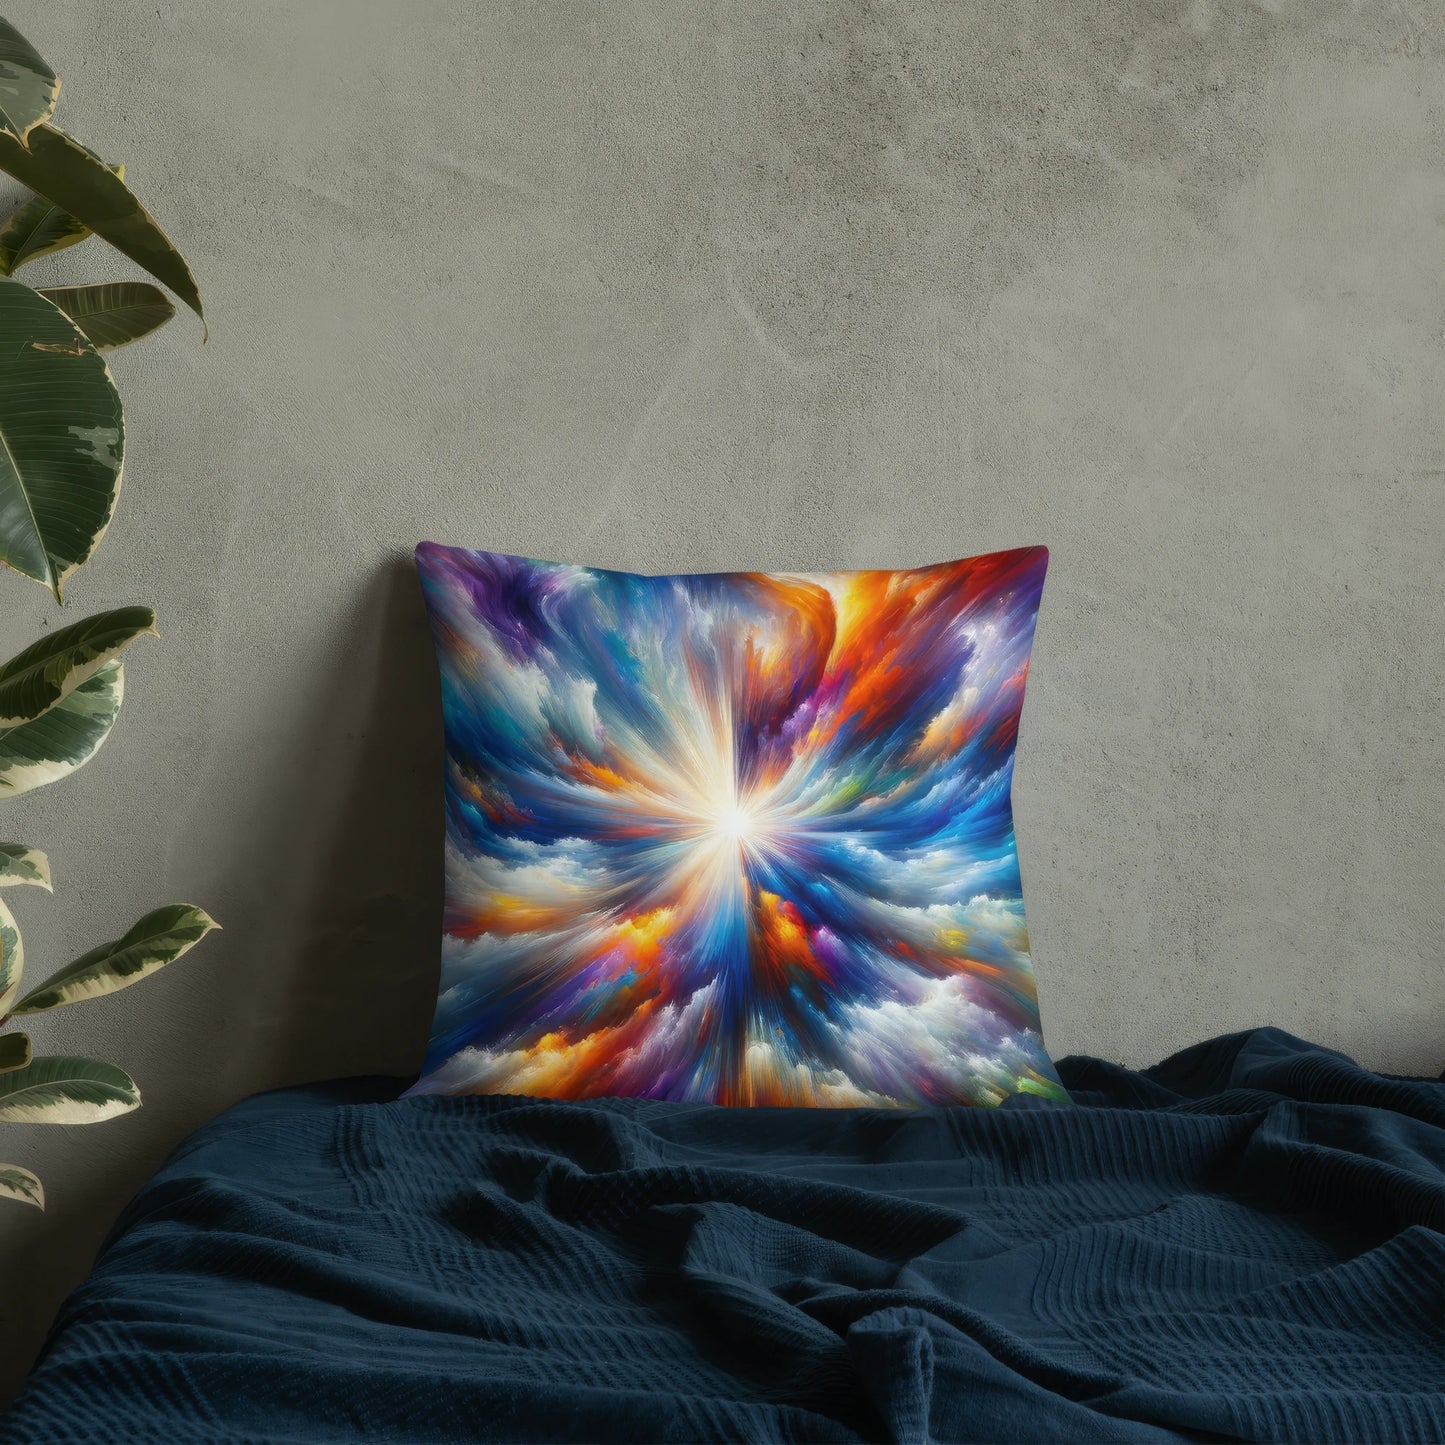 Abstract Art Pillow: Fusion Spectrum